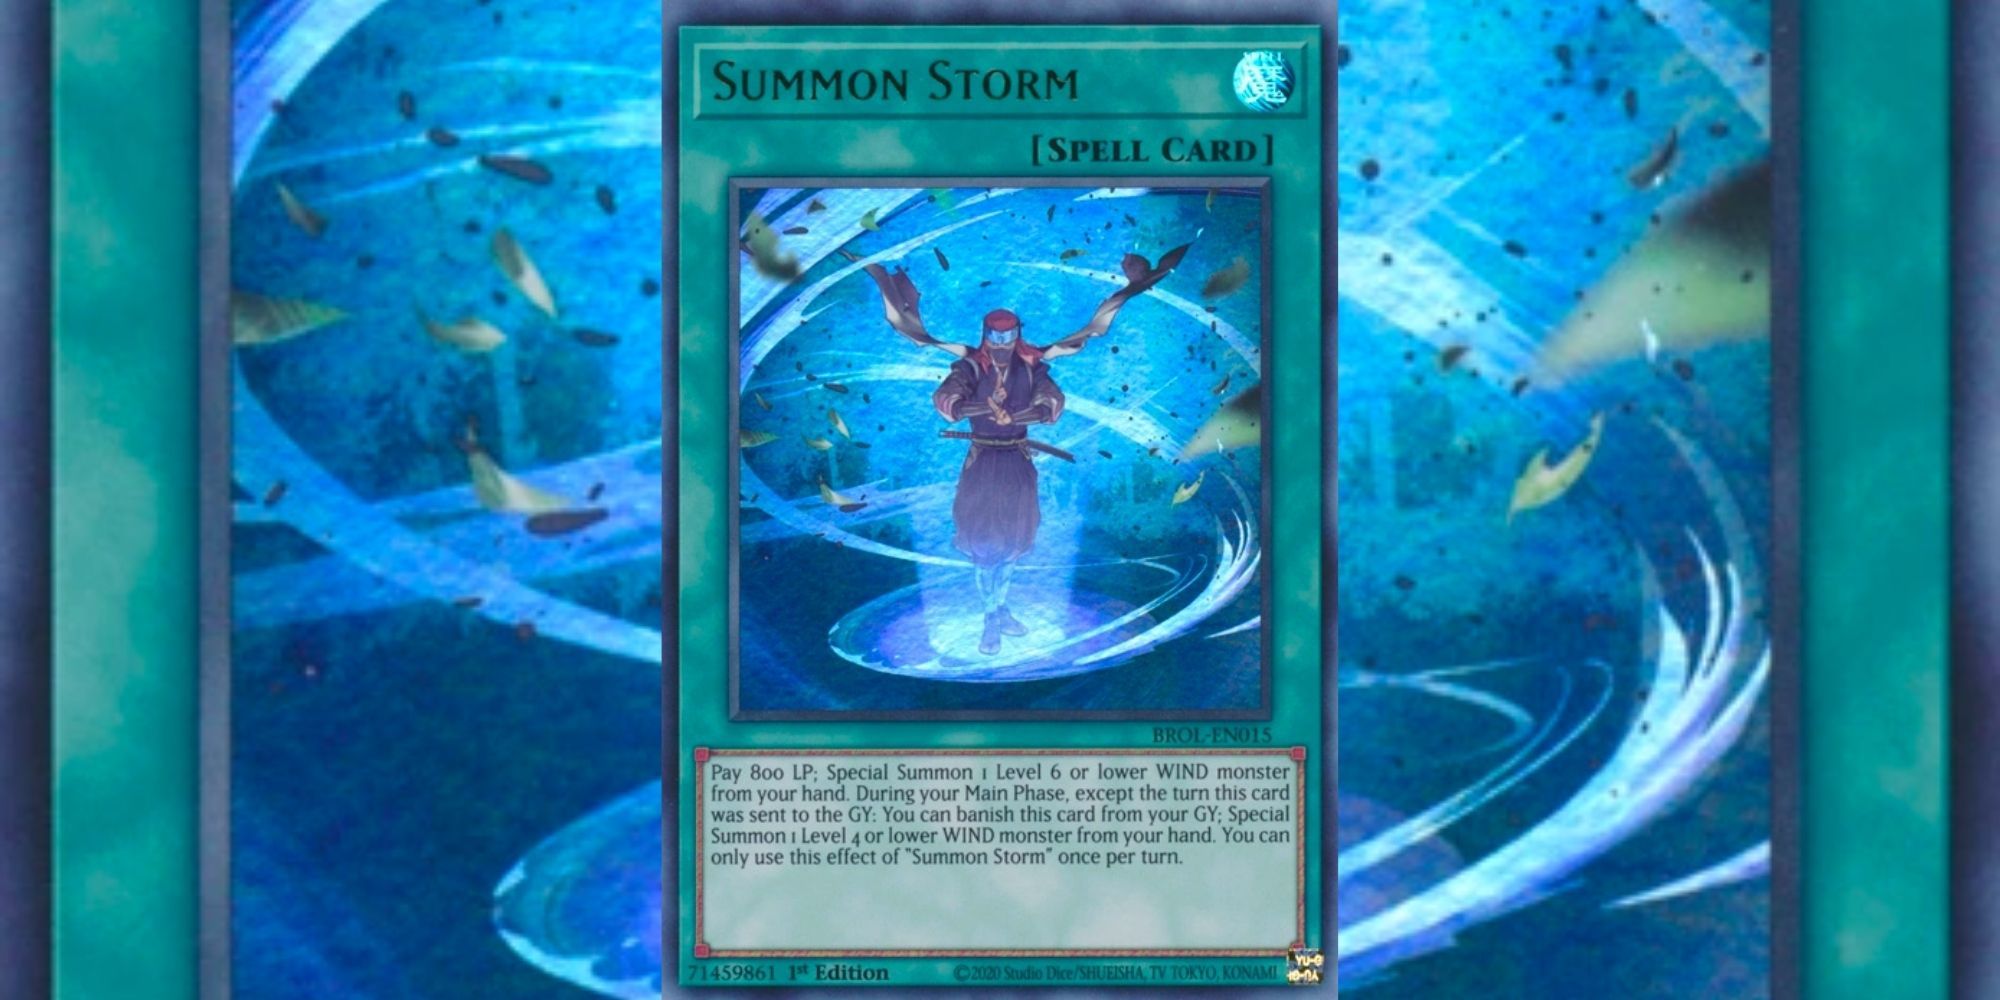 Summon Storm card in Yu-Gi-Oh!